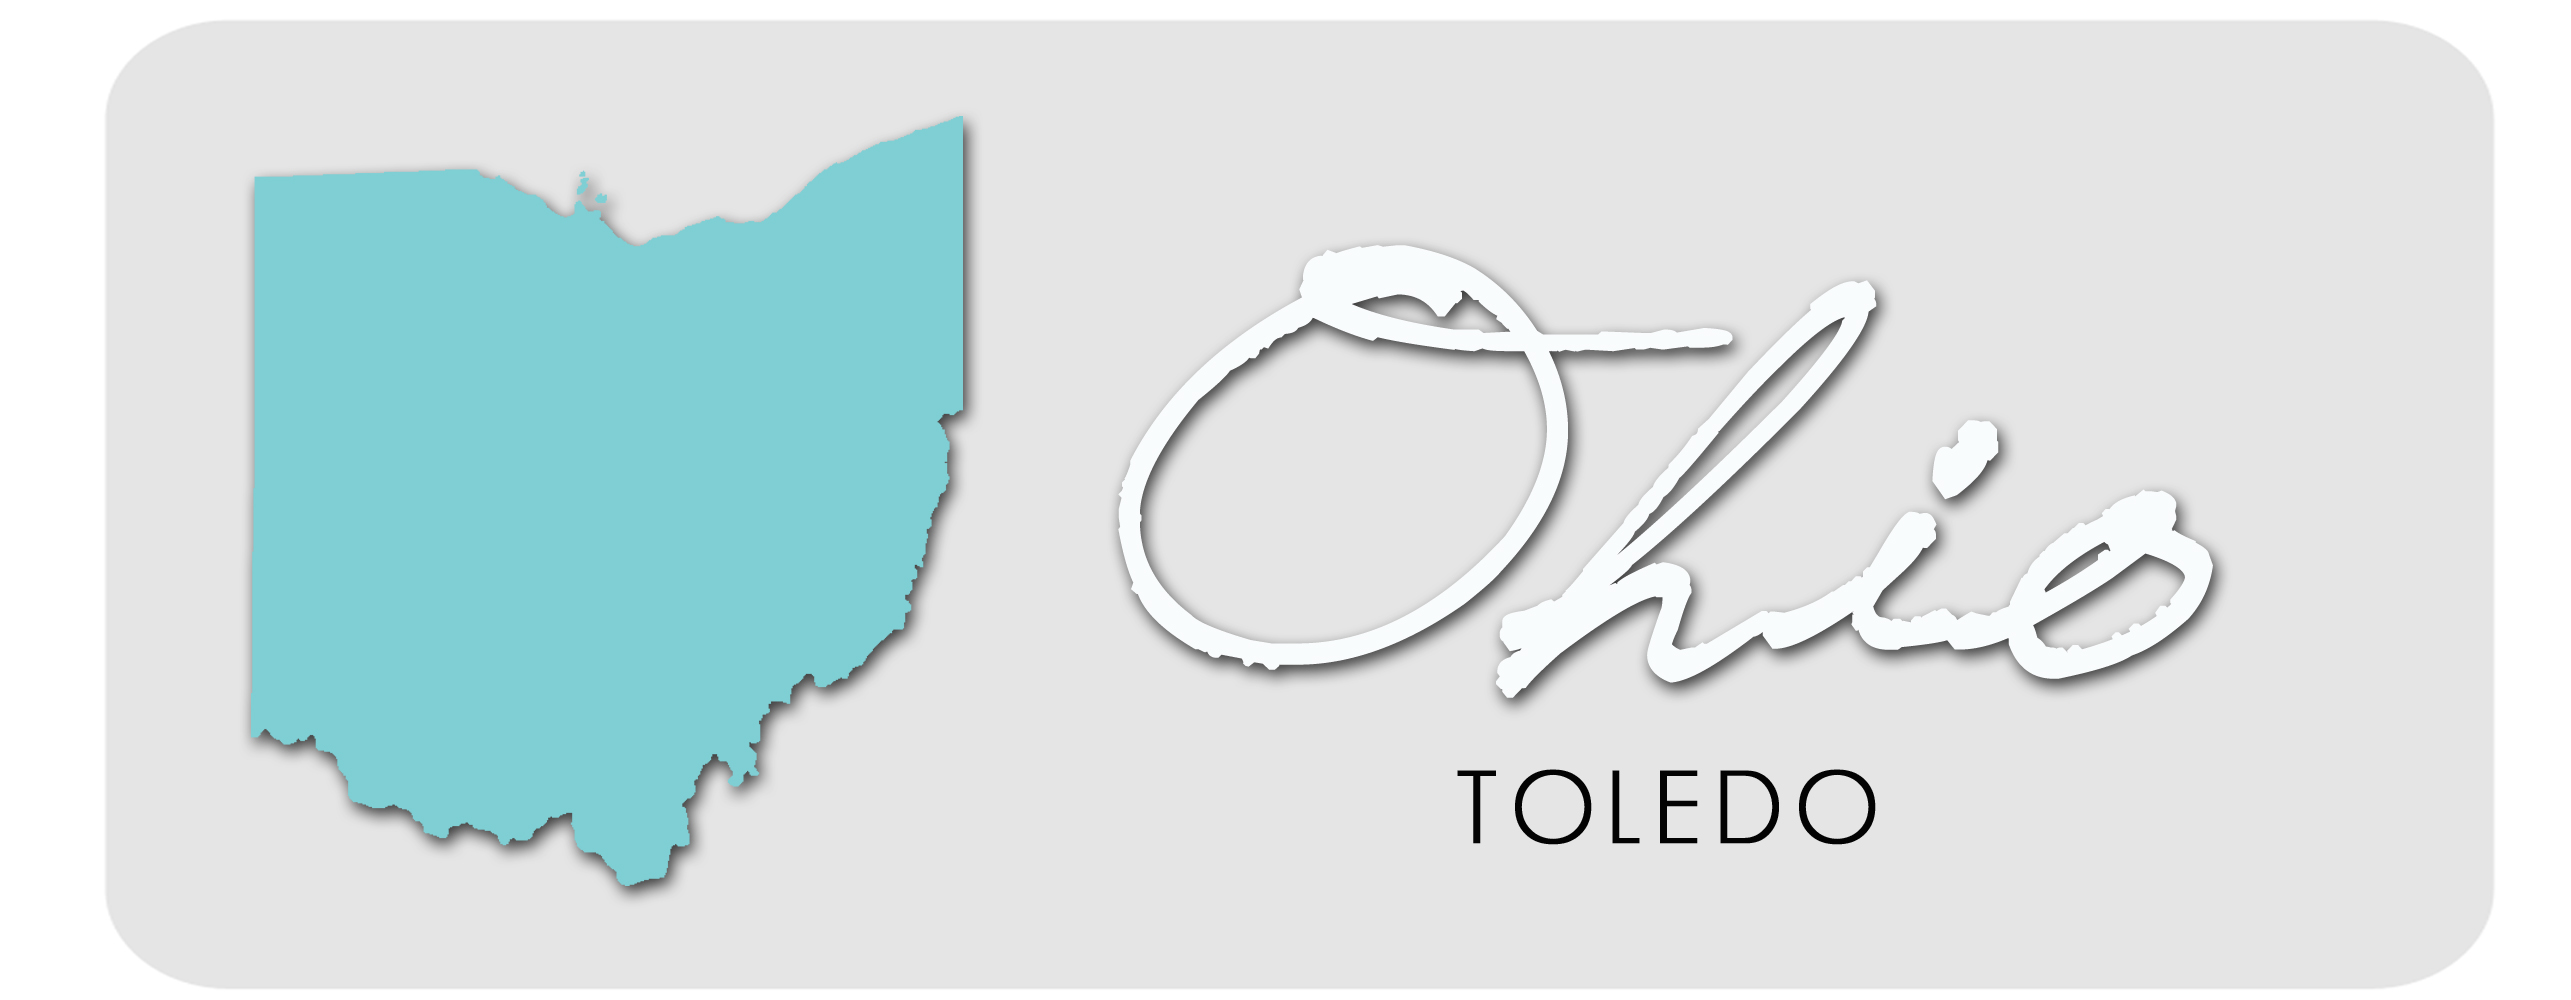 Toledo Health Insurance